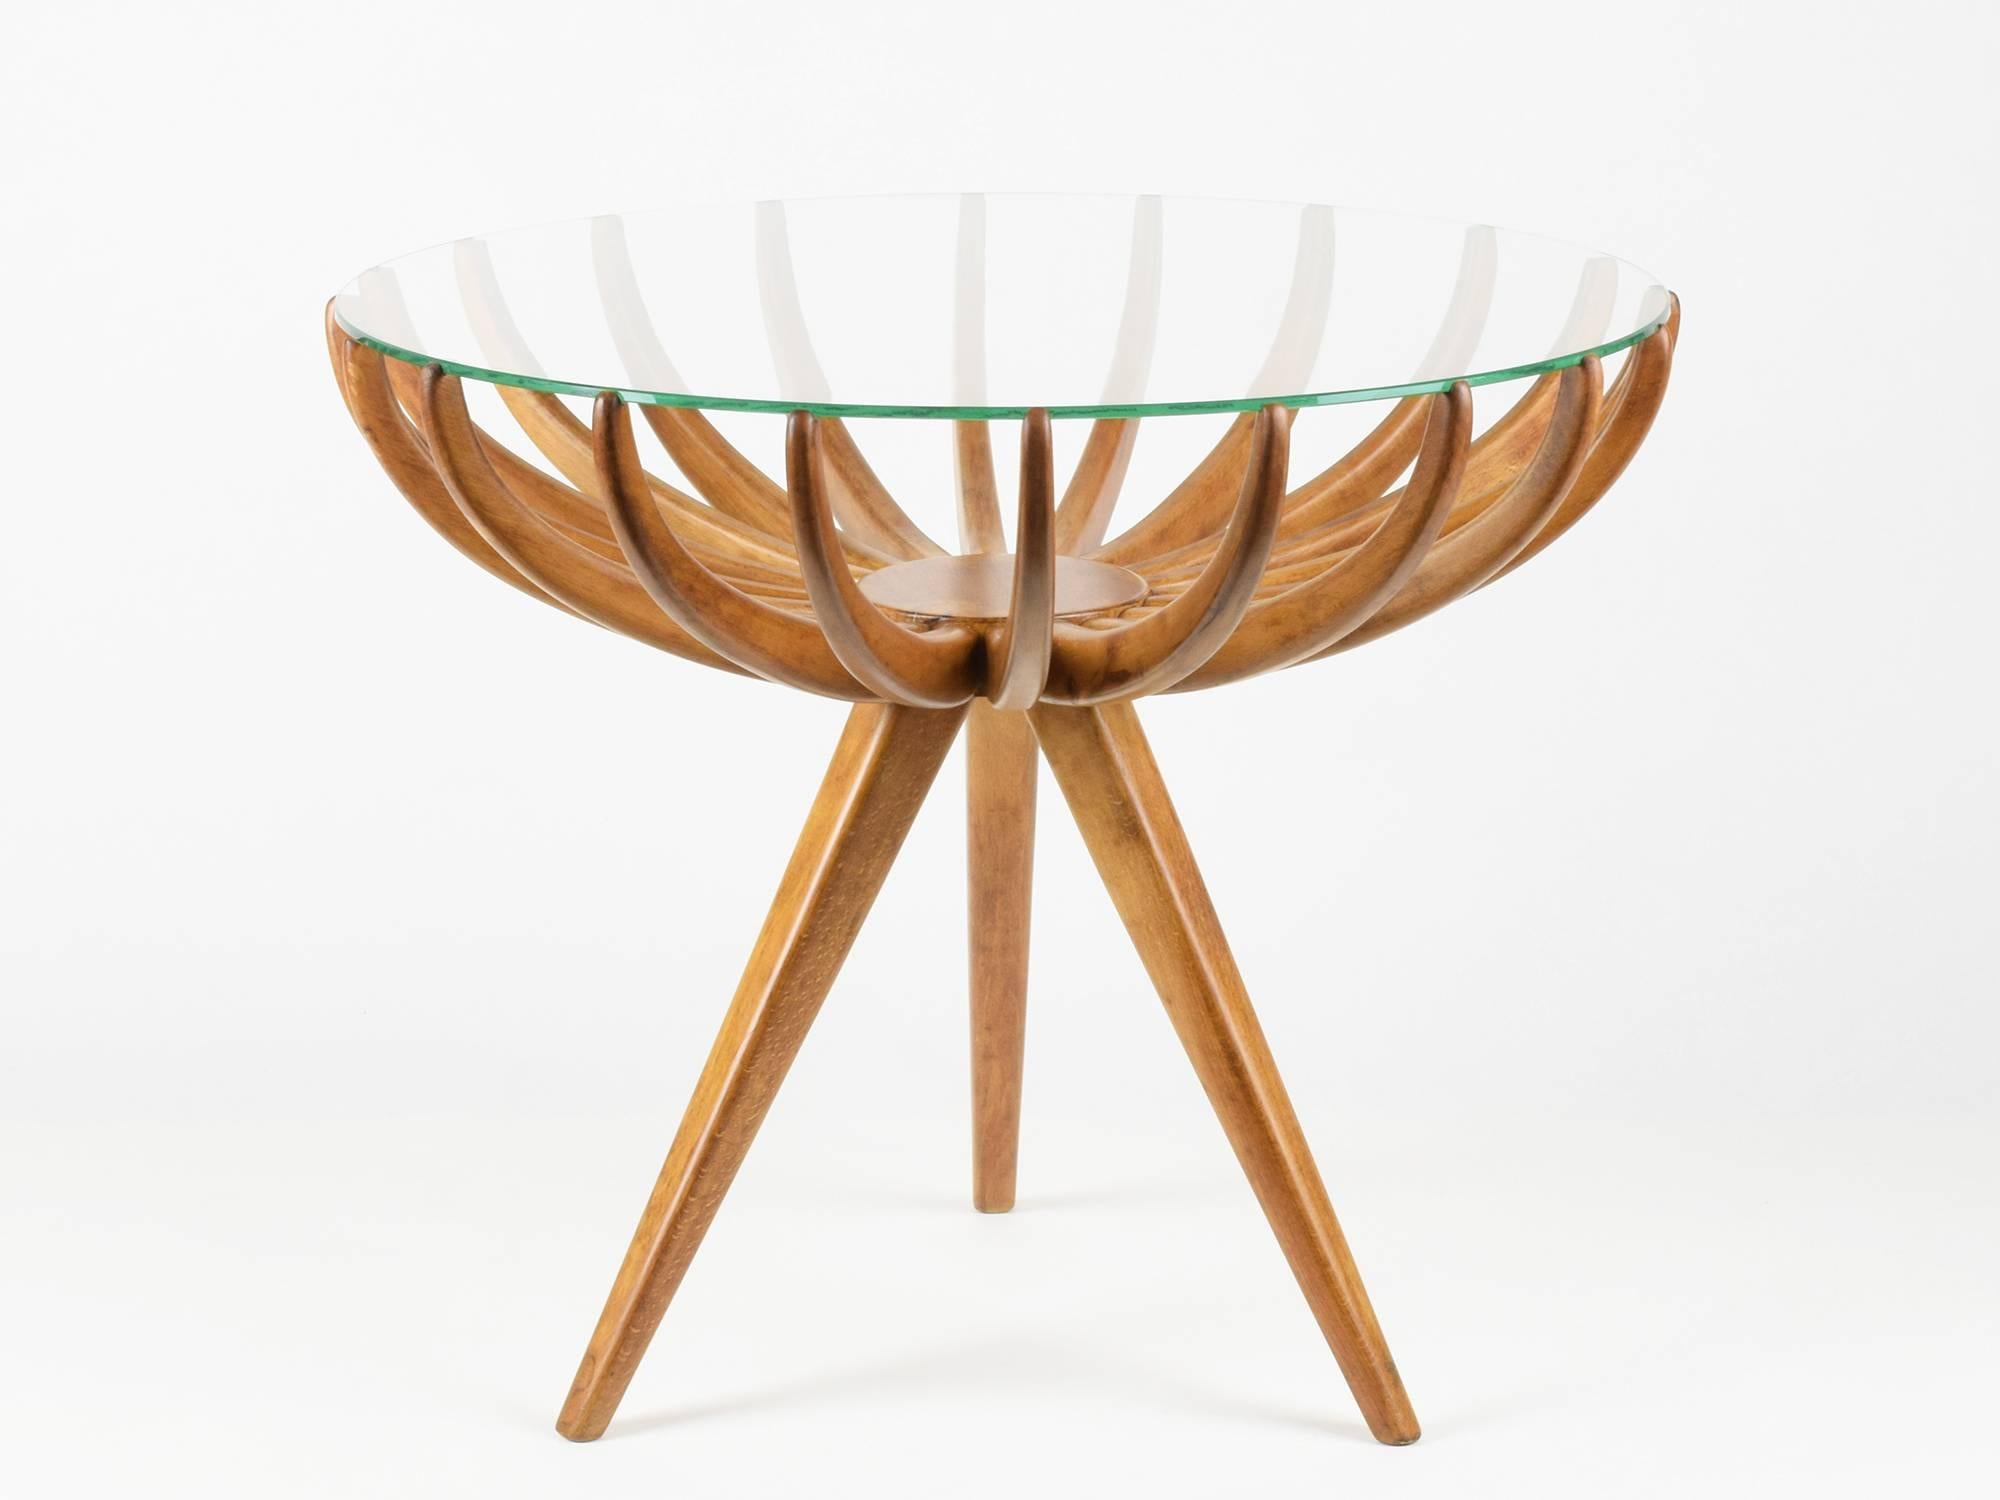 Carlo Di Carli
Milan, Italy

Occasional table, circa 1955.
Sculptural Italian Walnut wooden base, original glass top.

(References: Modernist, Carlo Mollino, Carlo Graffi, organic Modernism, Mid-Century)